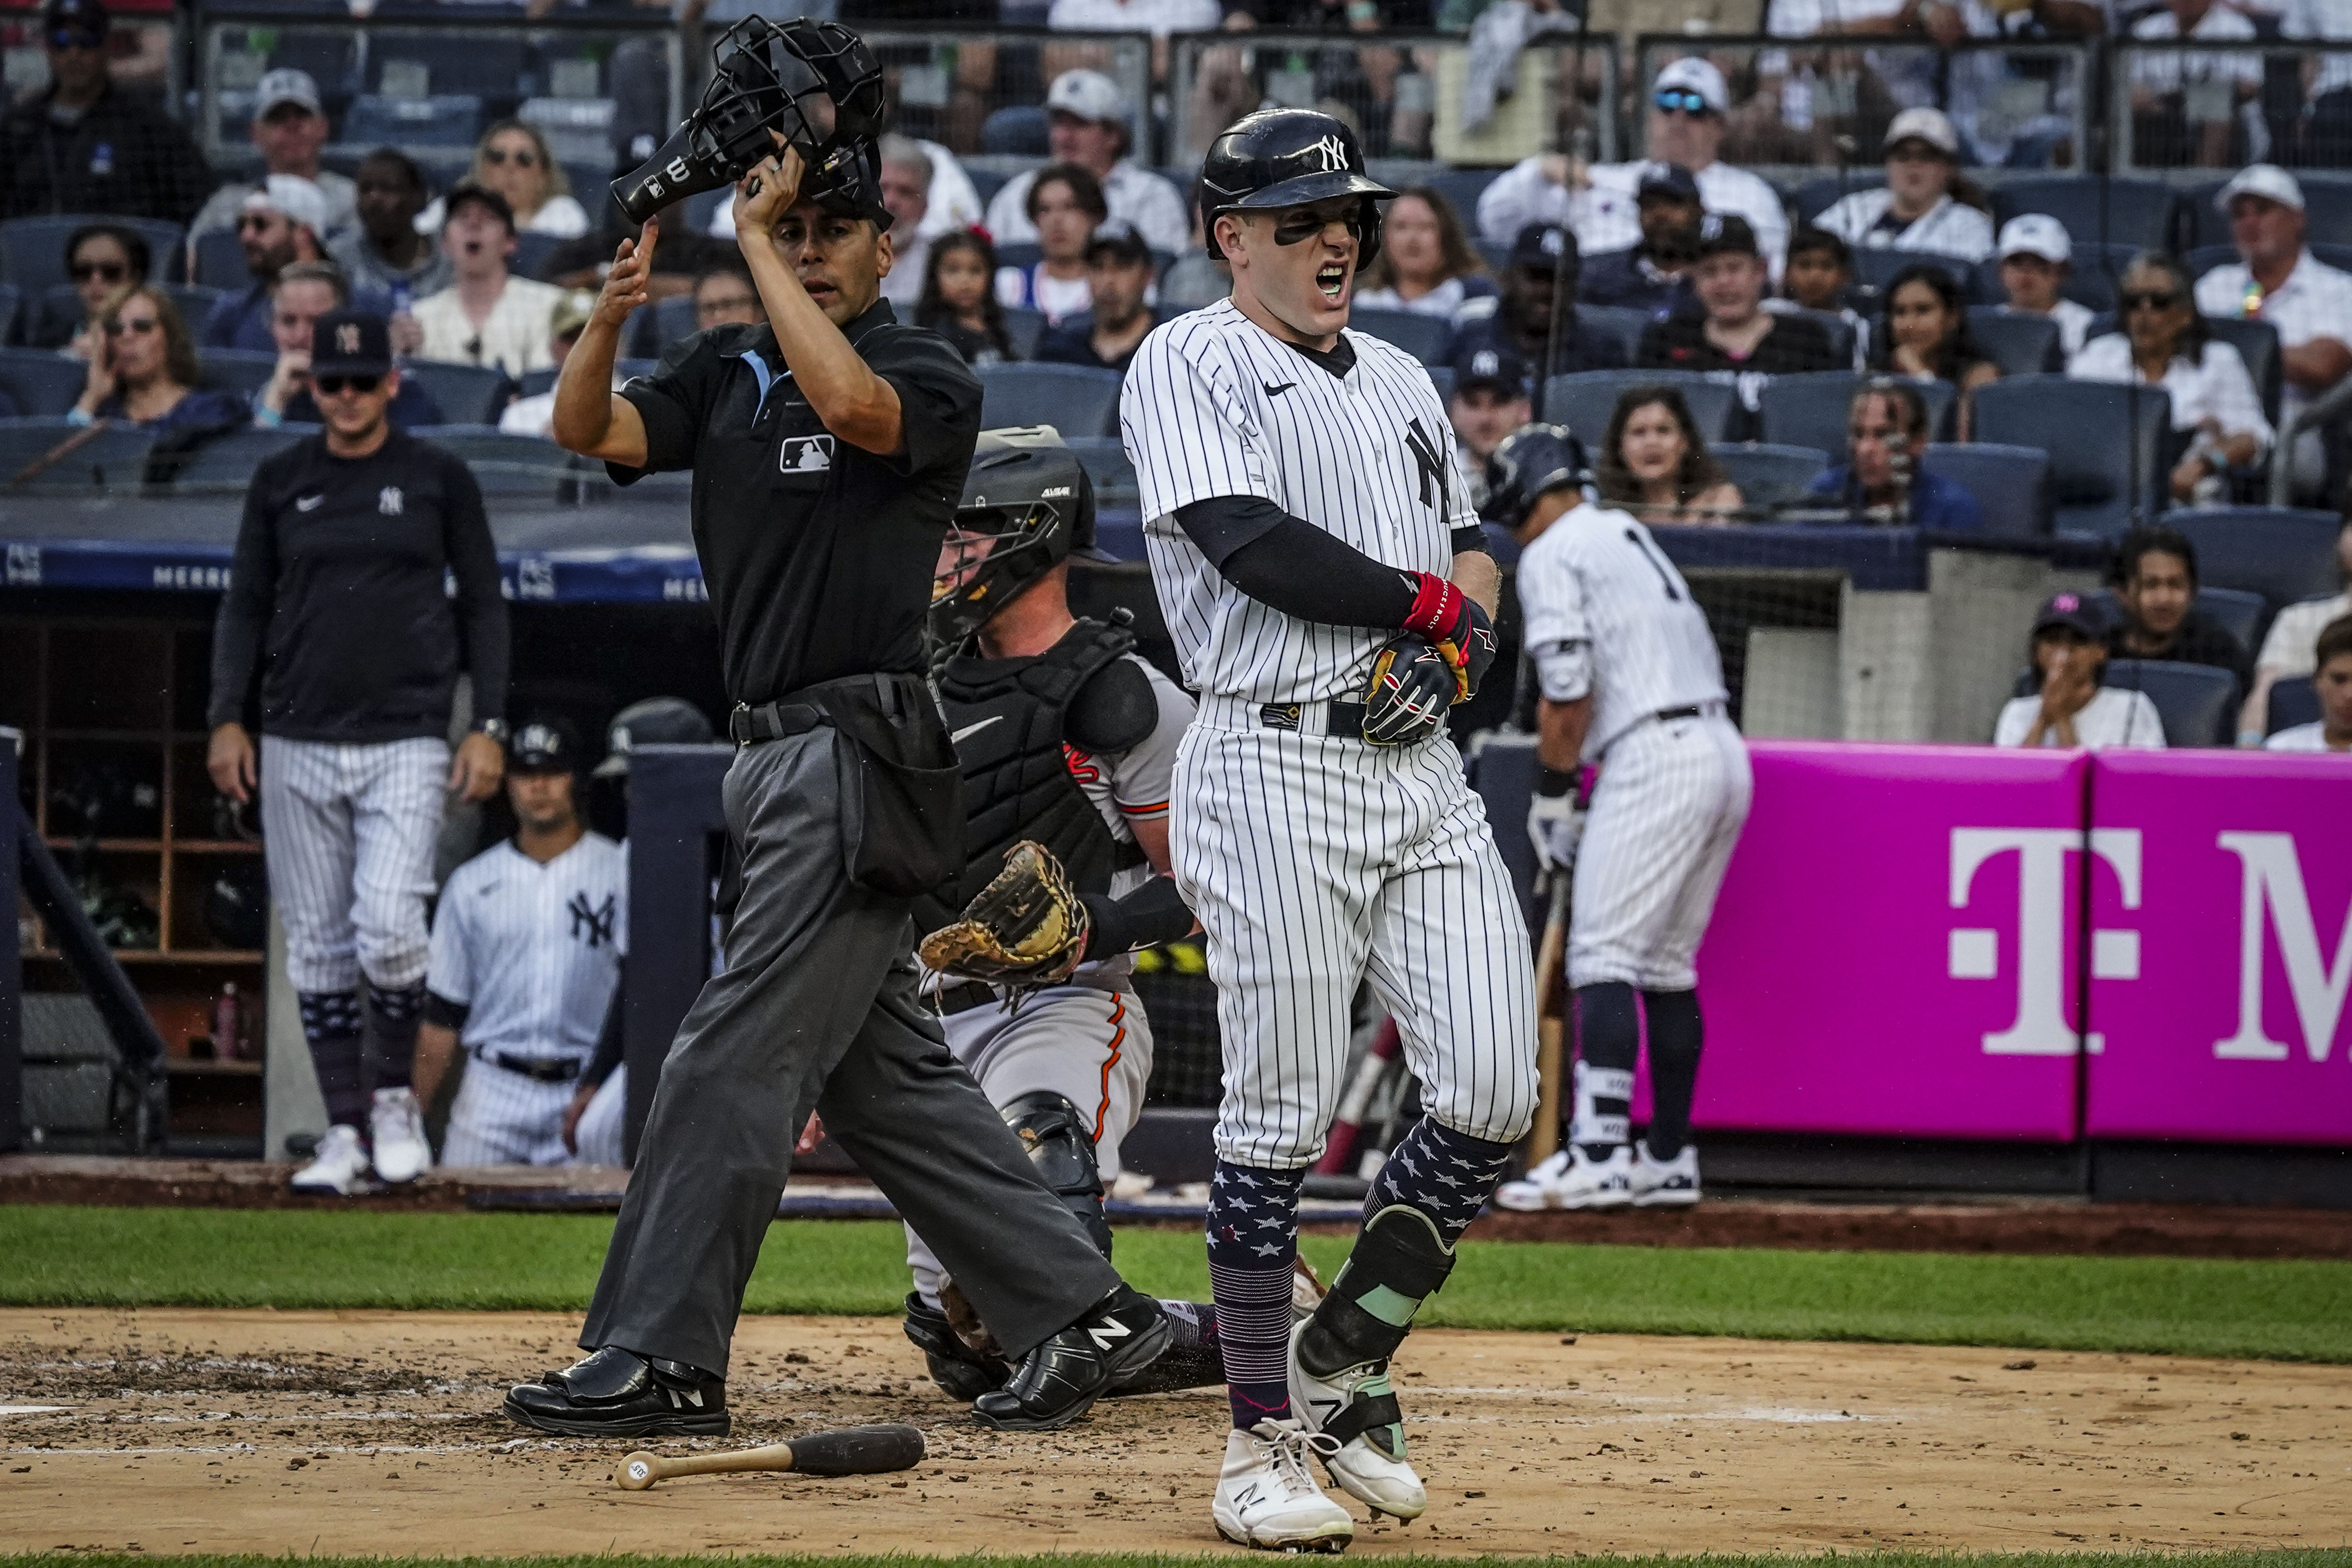 Aaron Hicks hits home run against Yankees as fans boo in Bronx